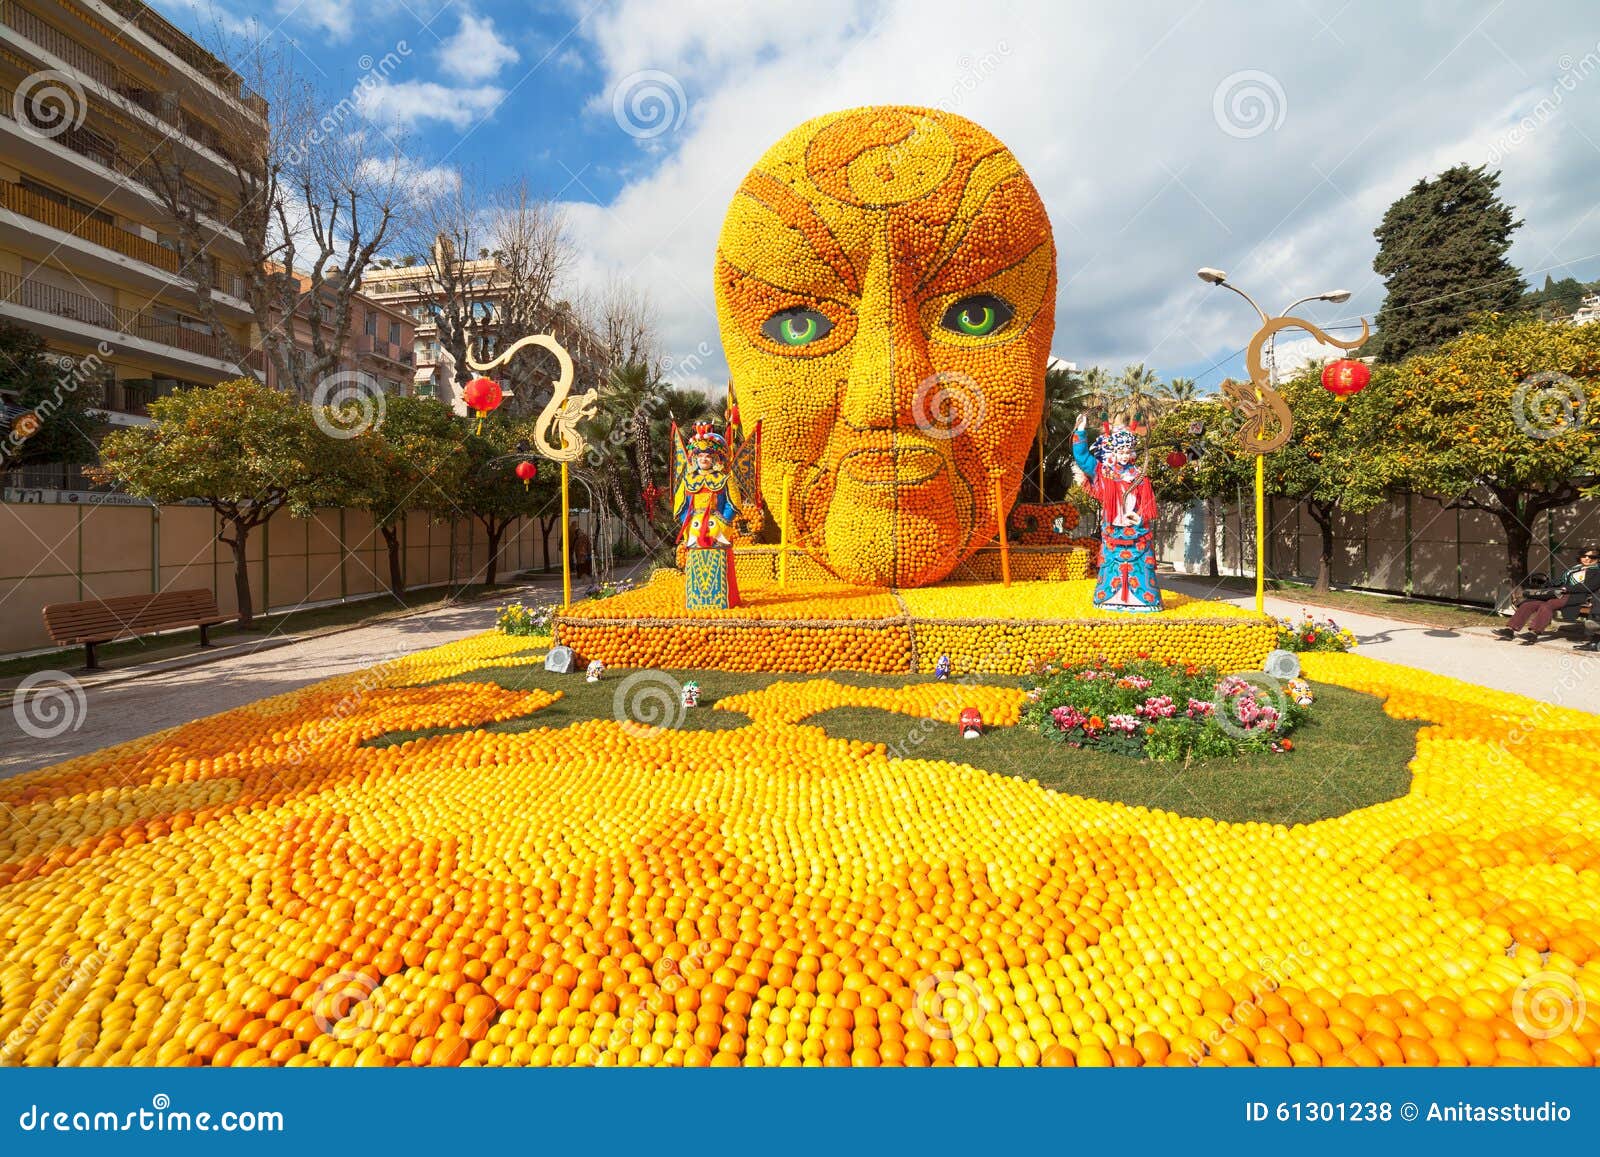 Zitronen-Festival 2015 Menton, Frankreich Redaktionelles Stockfoto ...